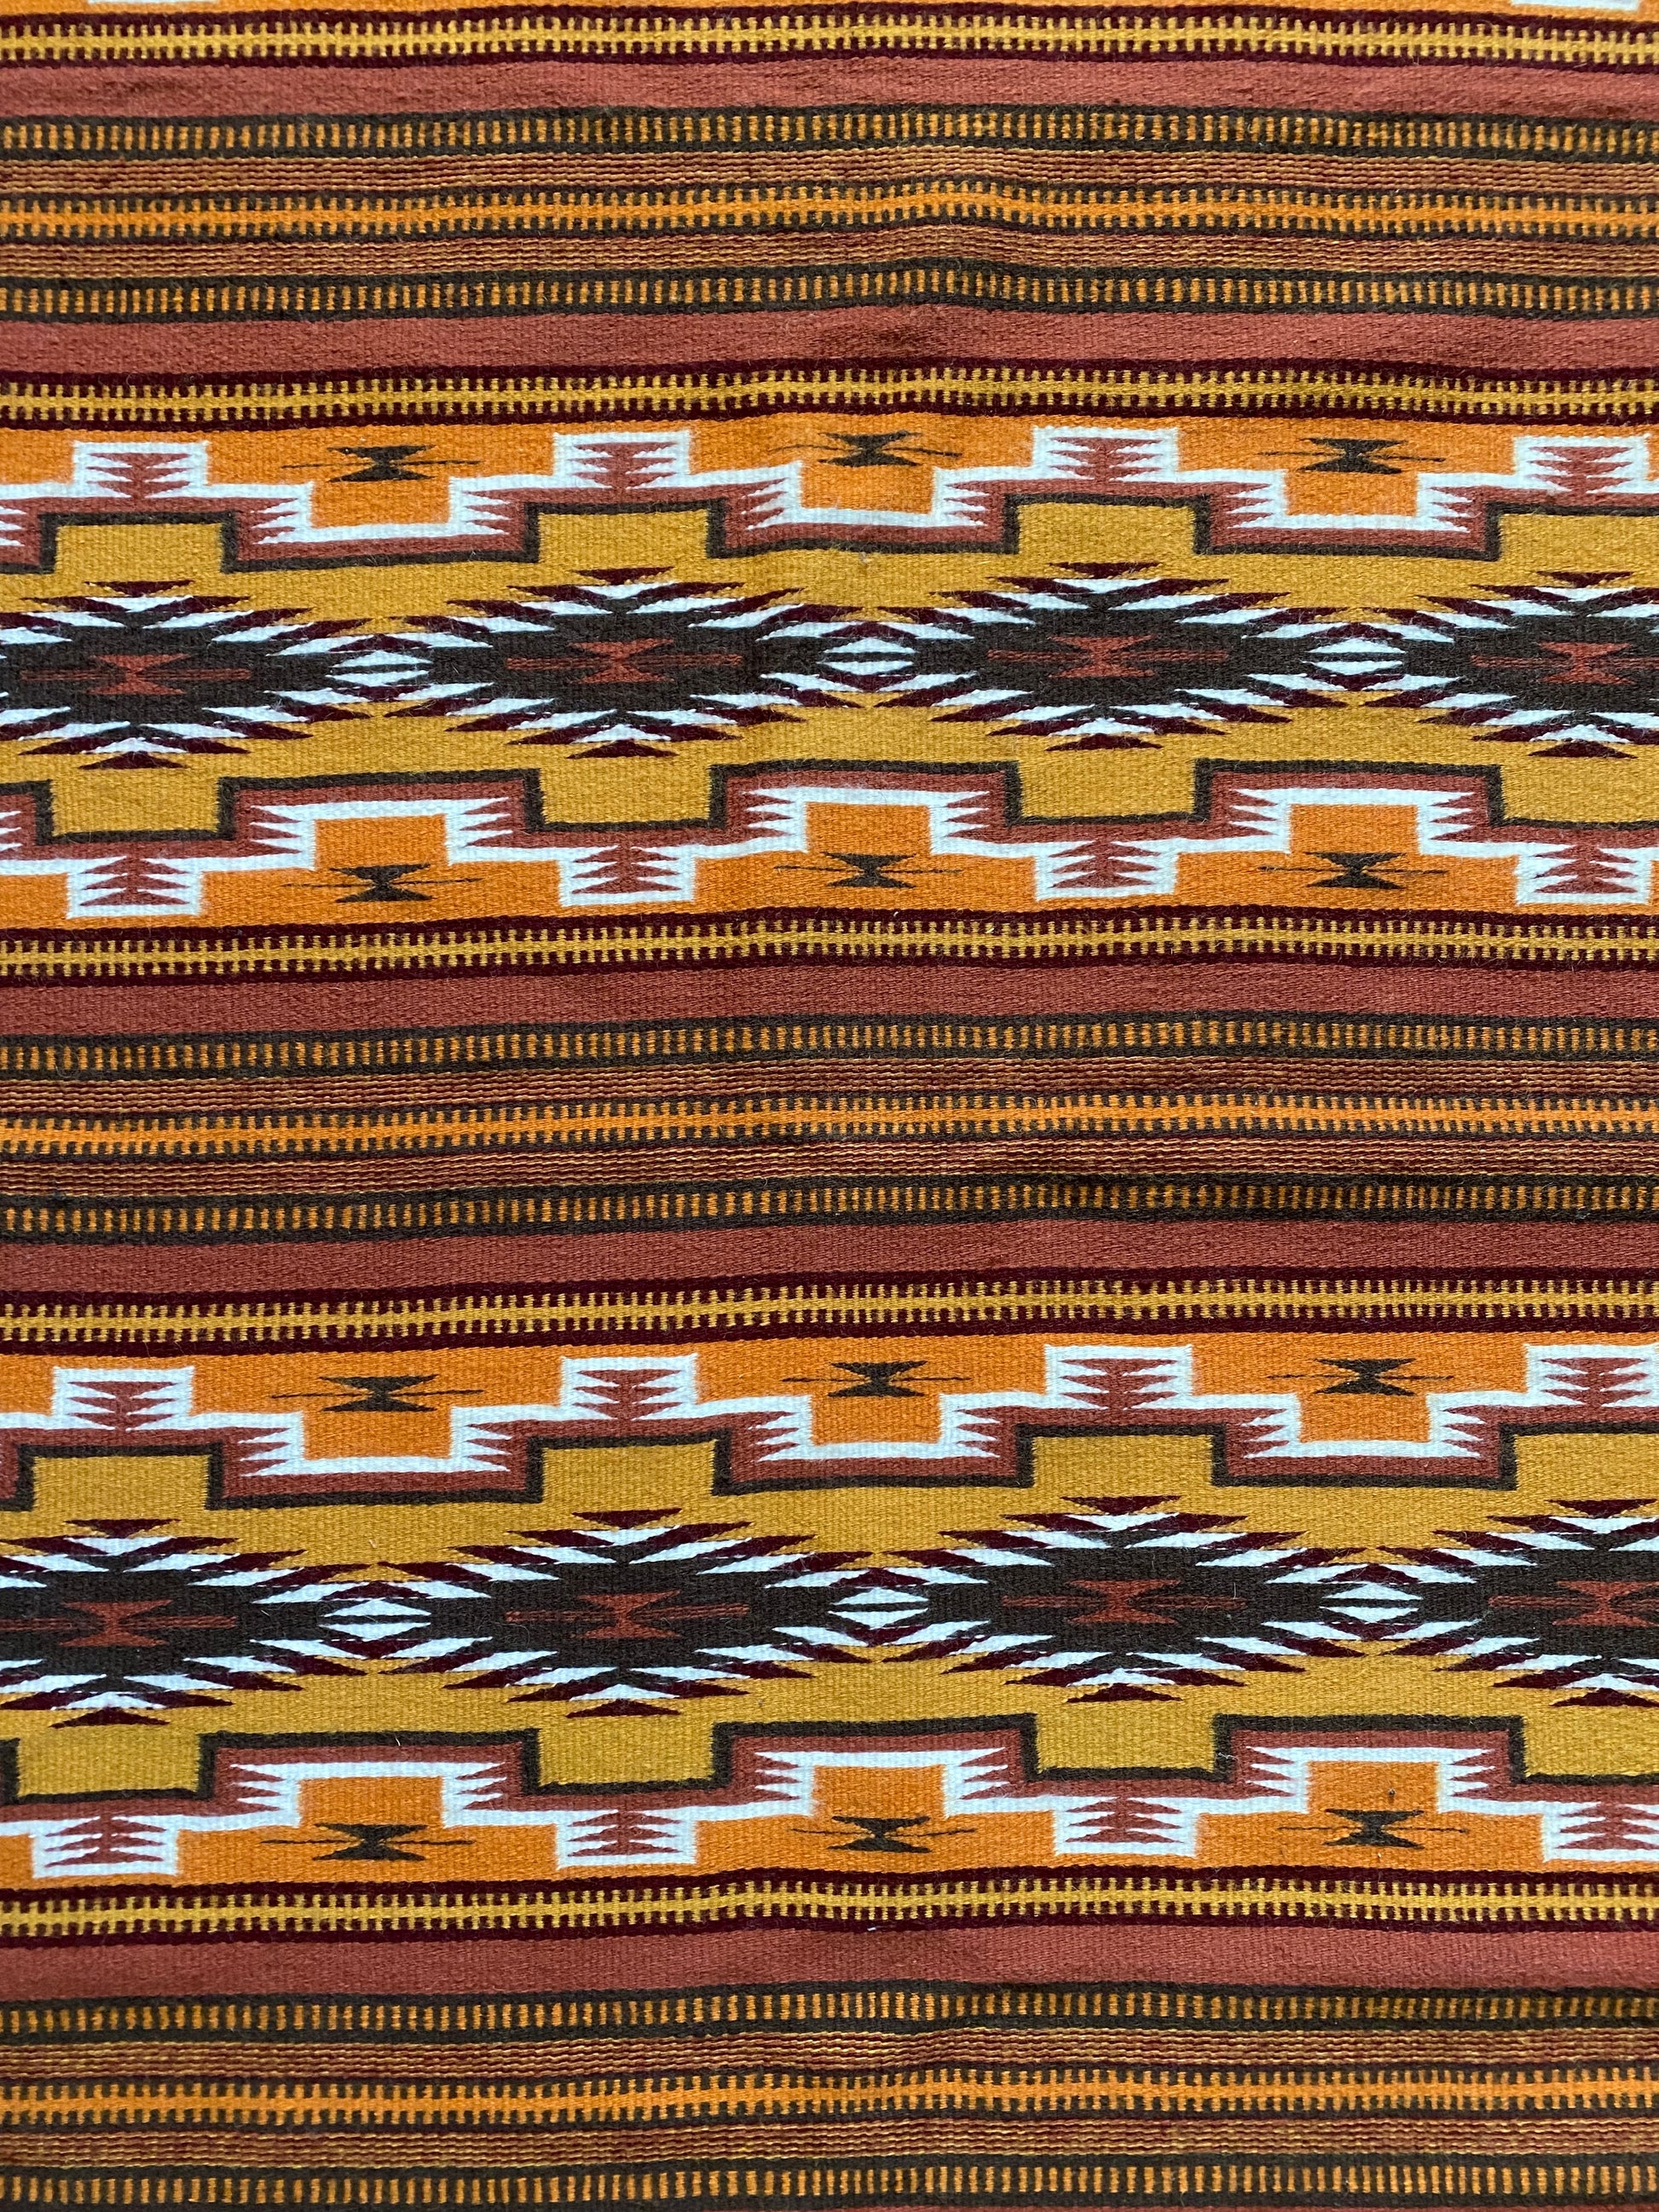 Navajo weaving for sale, Navajo rug for sale, navajo crystal weaving, telluride gallery, native american art